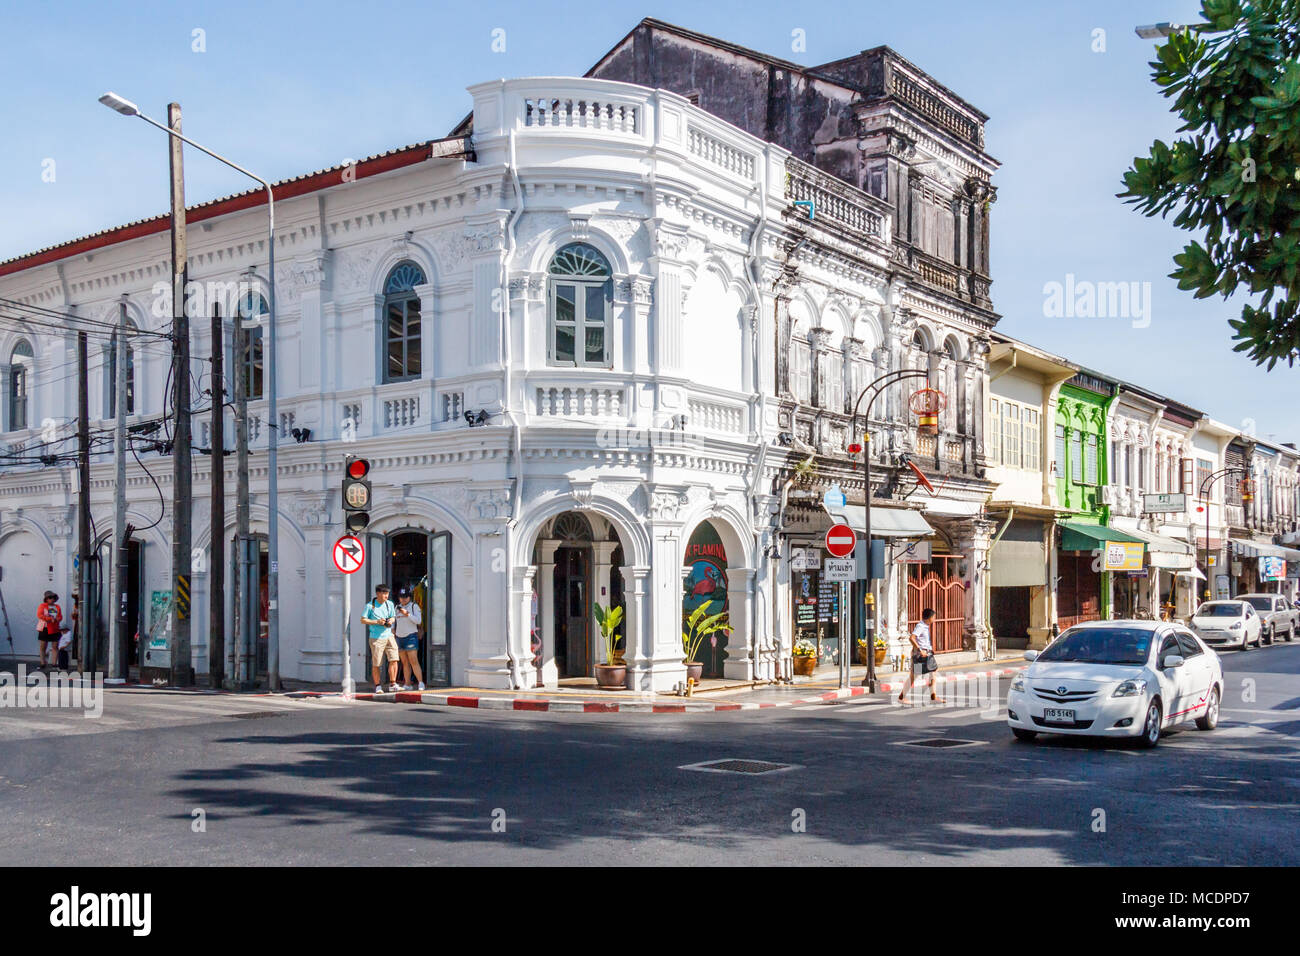 Street corner with Sino Portuguese architecture, Old Phuket Town, Thailand Stock Photo